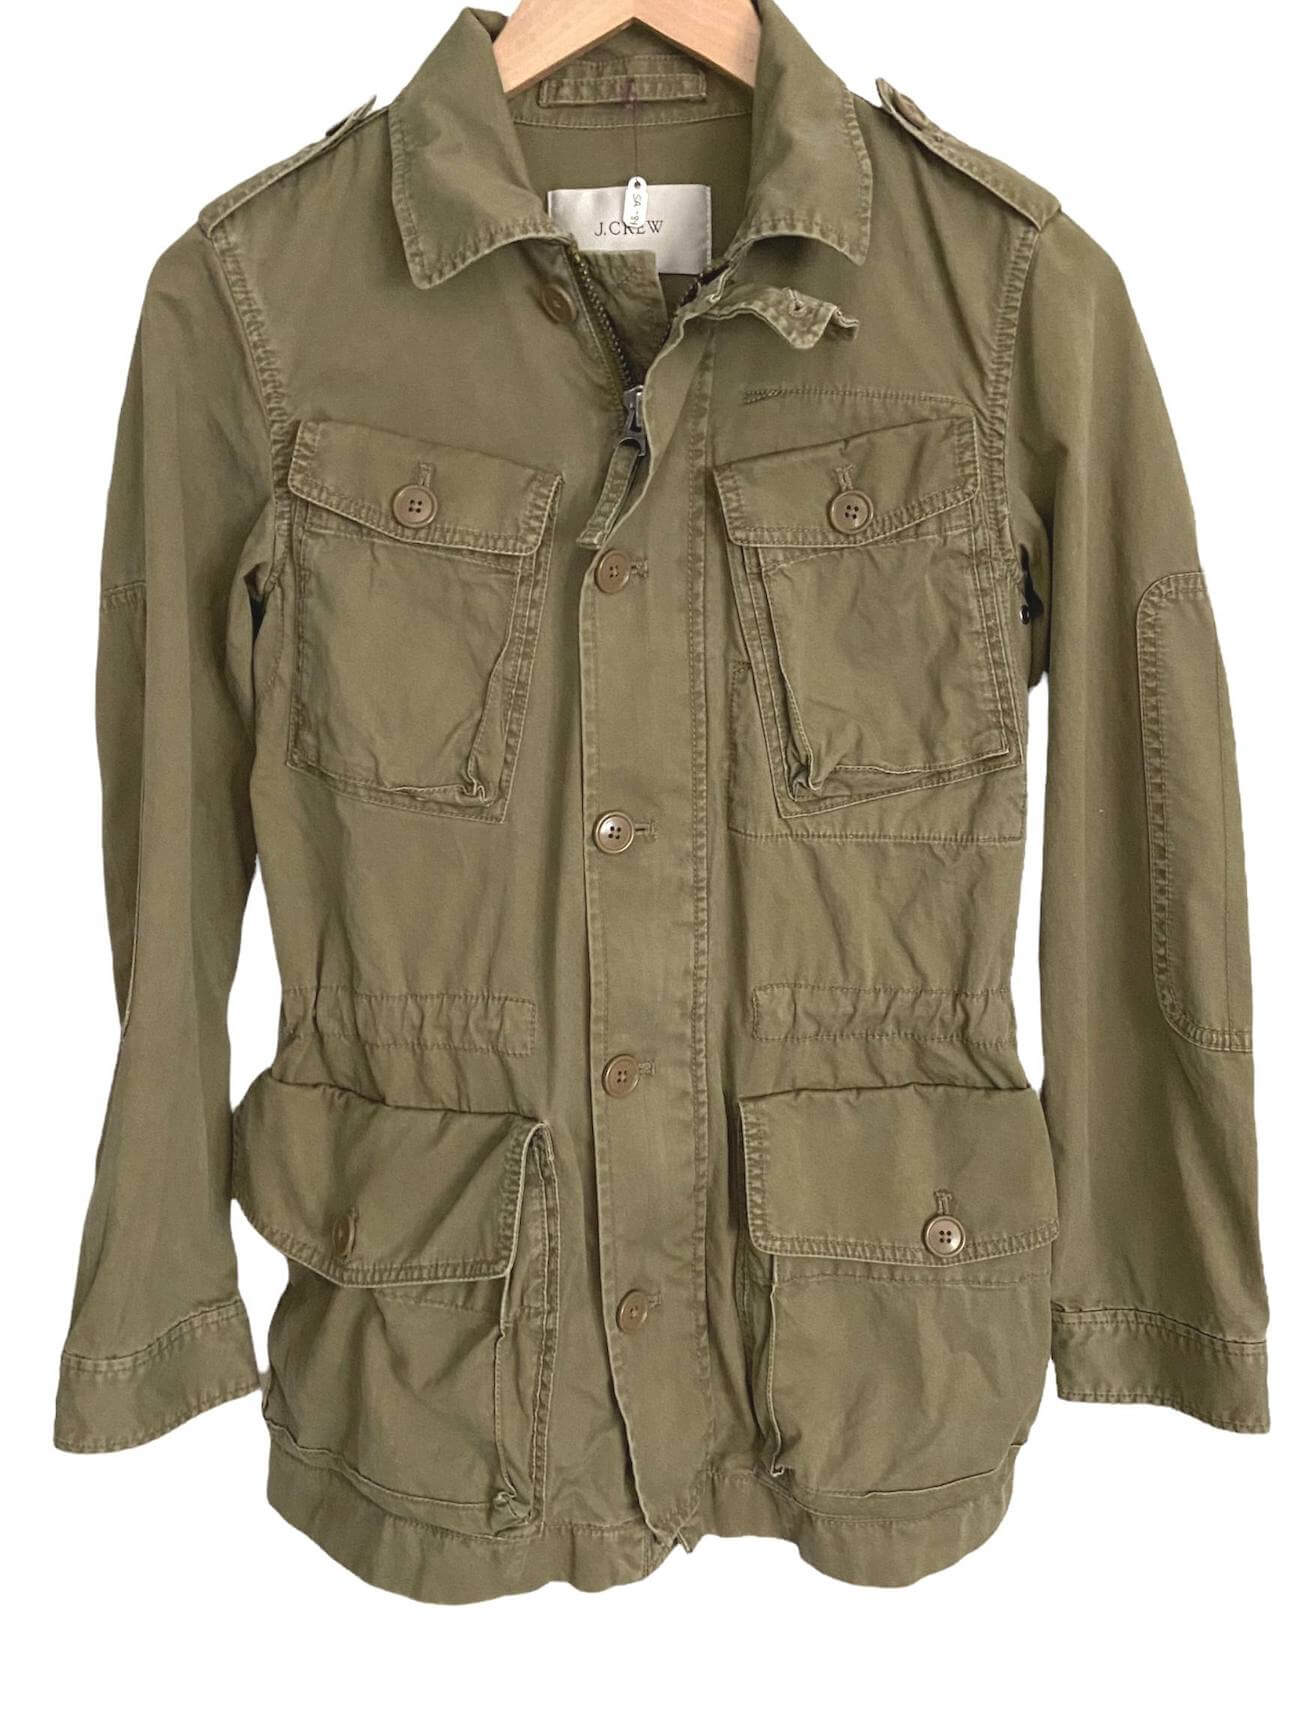 Soft Autumn J.CREW army hooded utility jacket